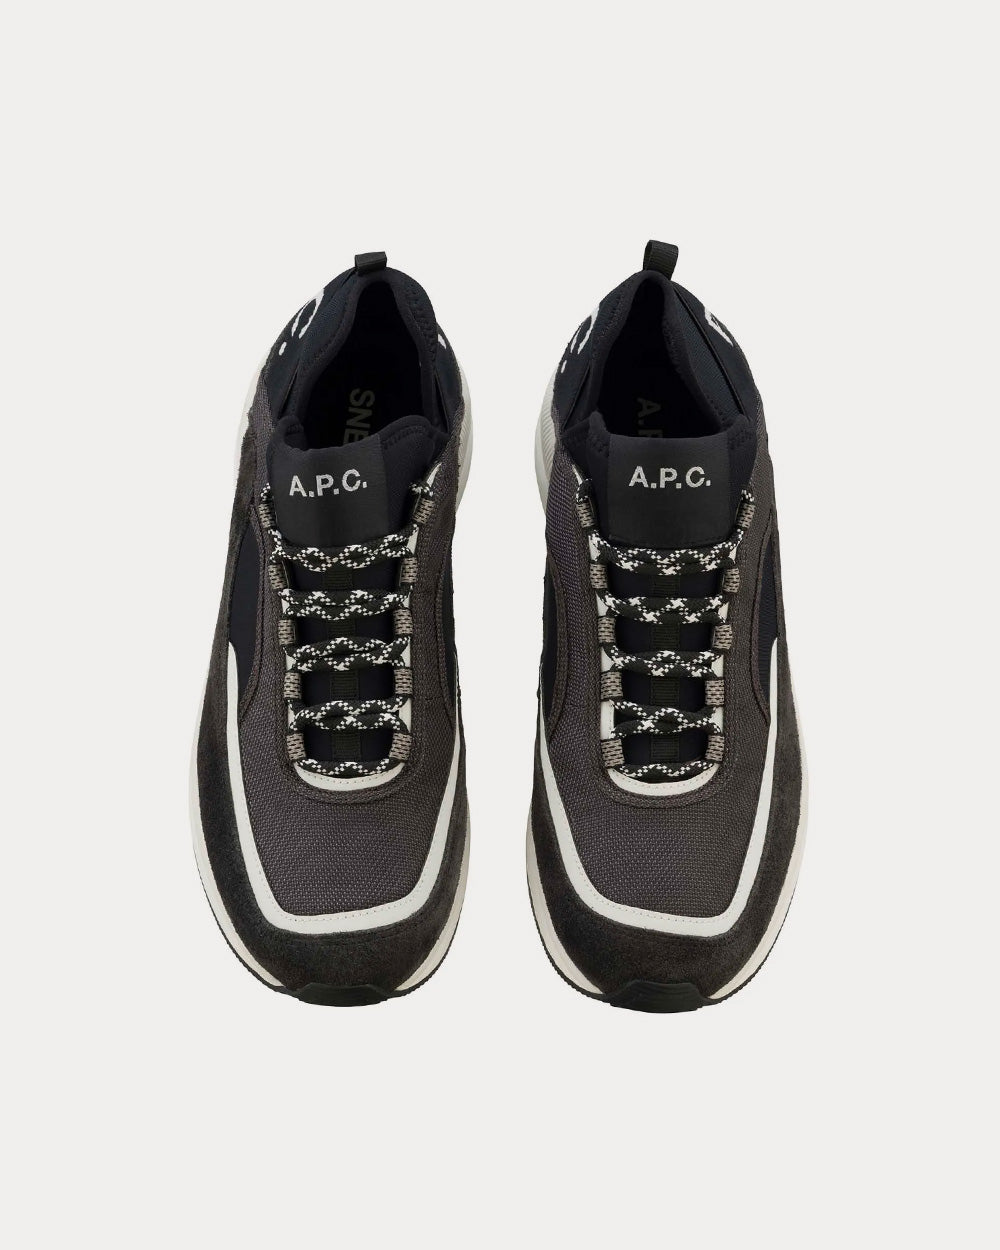 A.P.C. Run Around Charcoal Grey Low Top Sneakers - Sneak in Peace